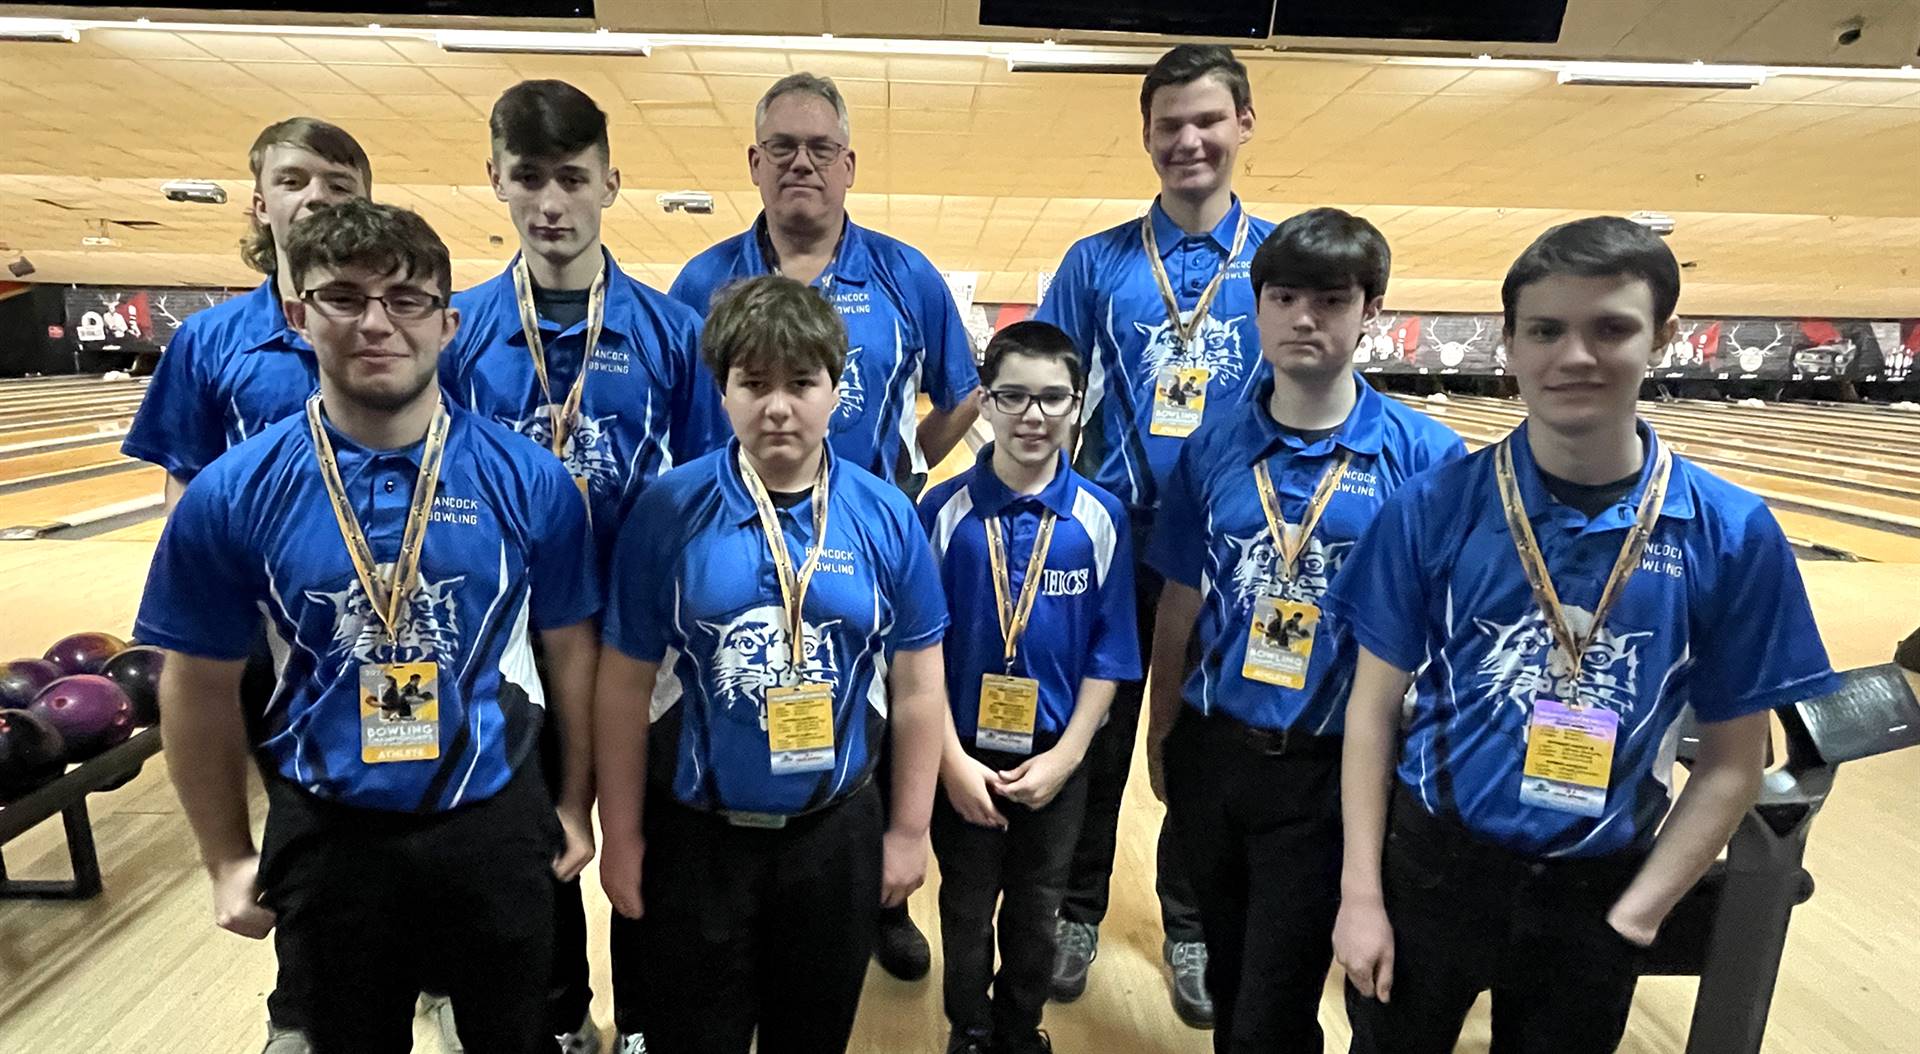 Hancock Boys Bowling Team - 2022 State Tournament Qualifier